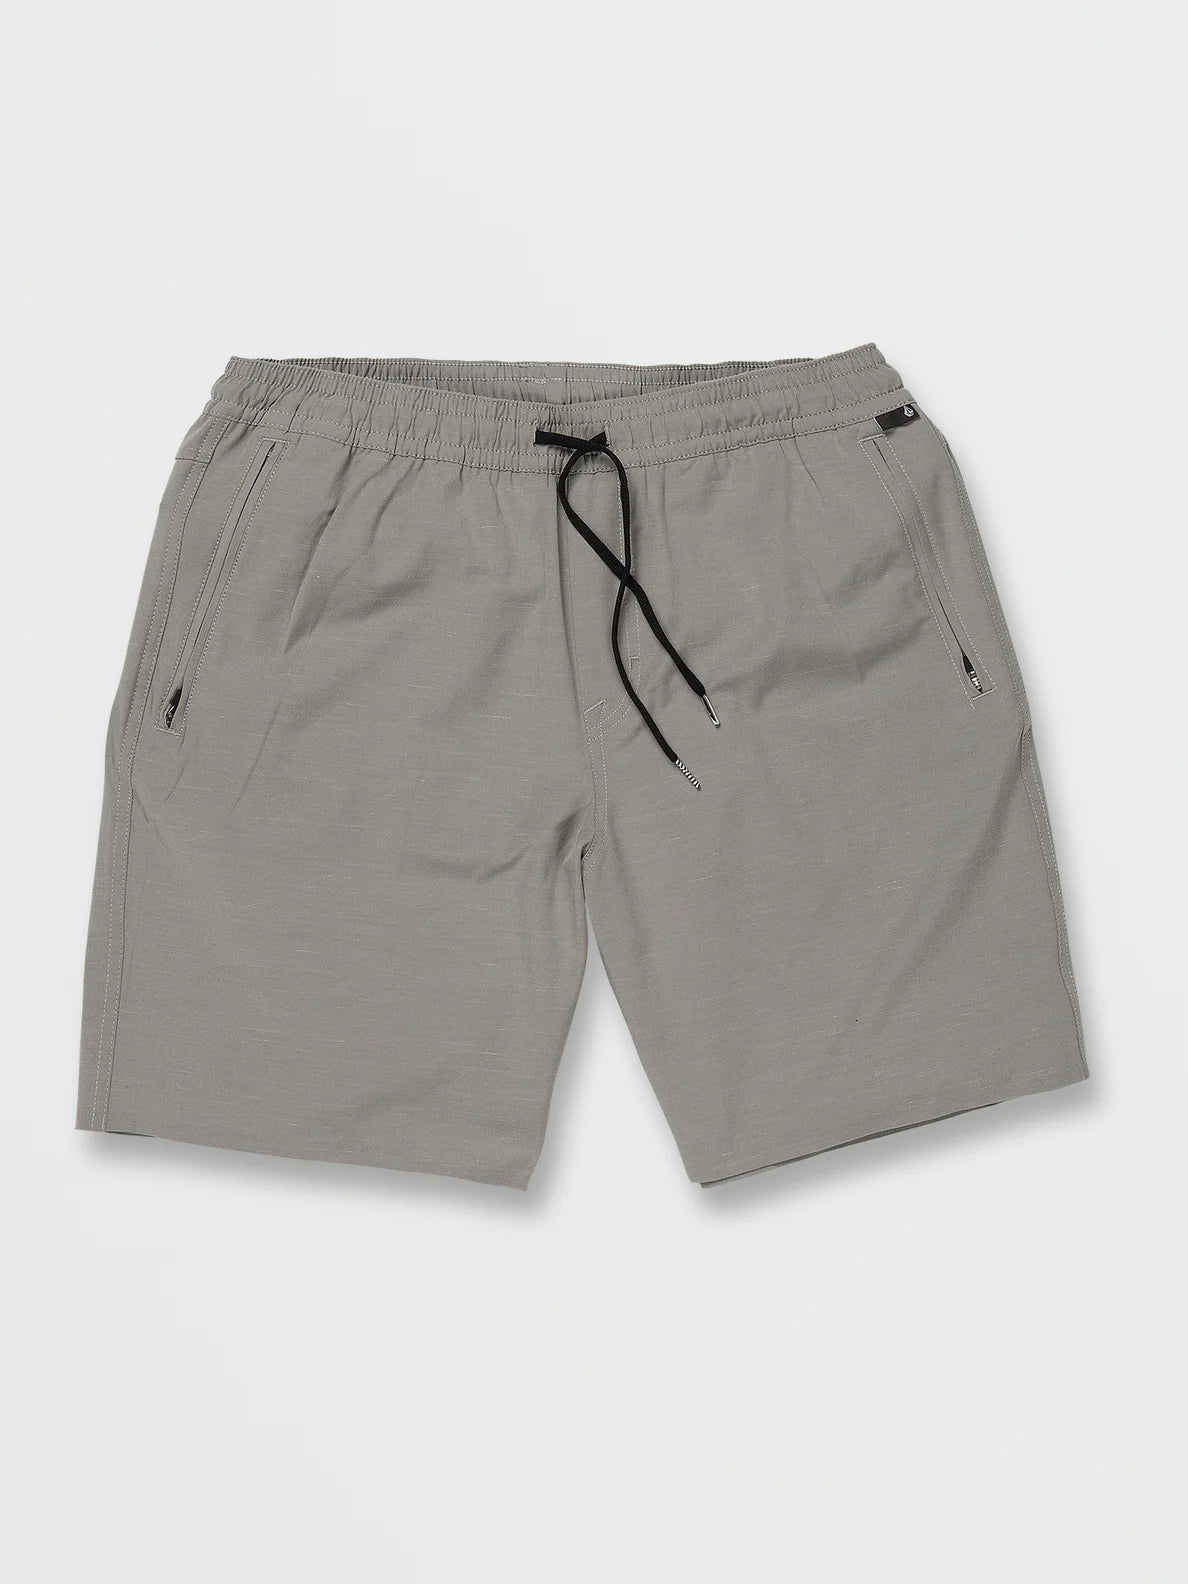 Pantalon Corto Volcom Wrecpack Hybrid 19" - Moonbean | Pantalones cortos de Hombre | Todos los pantalones de hombre | Volcom Shop | surfdevils.com